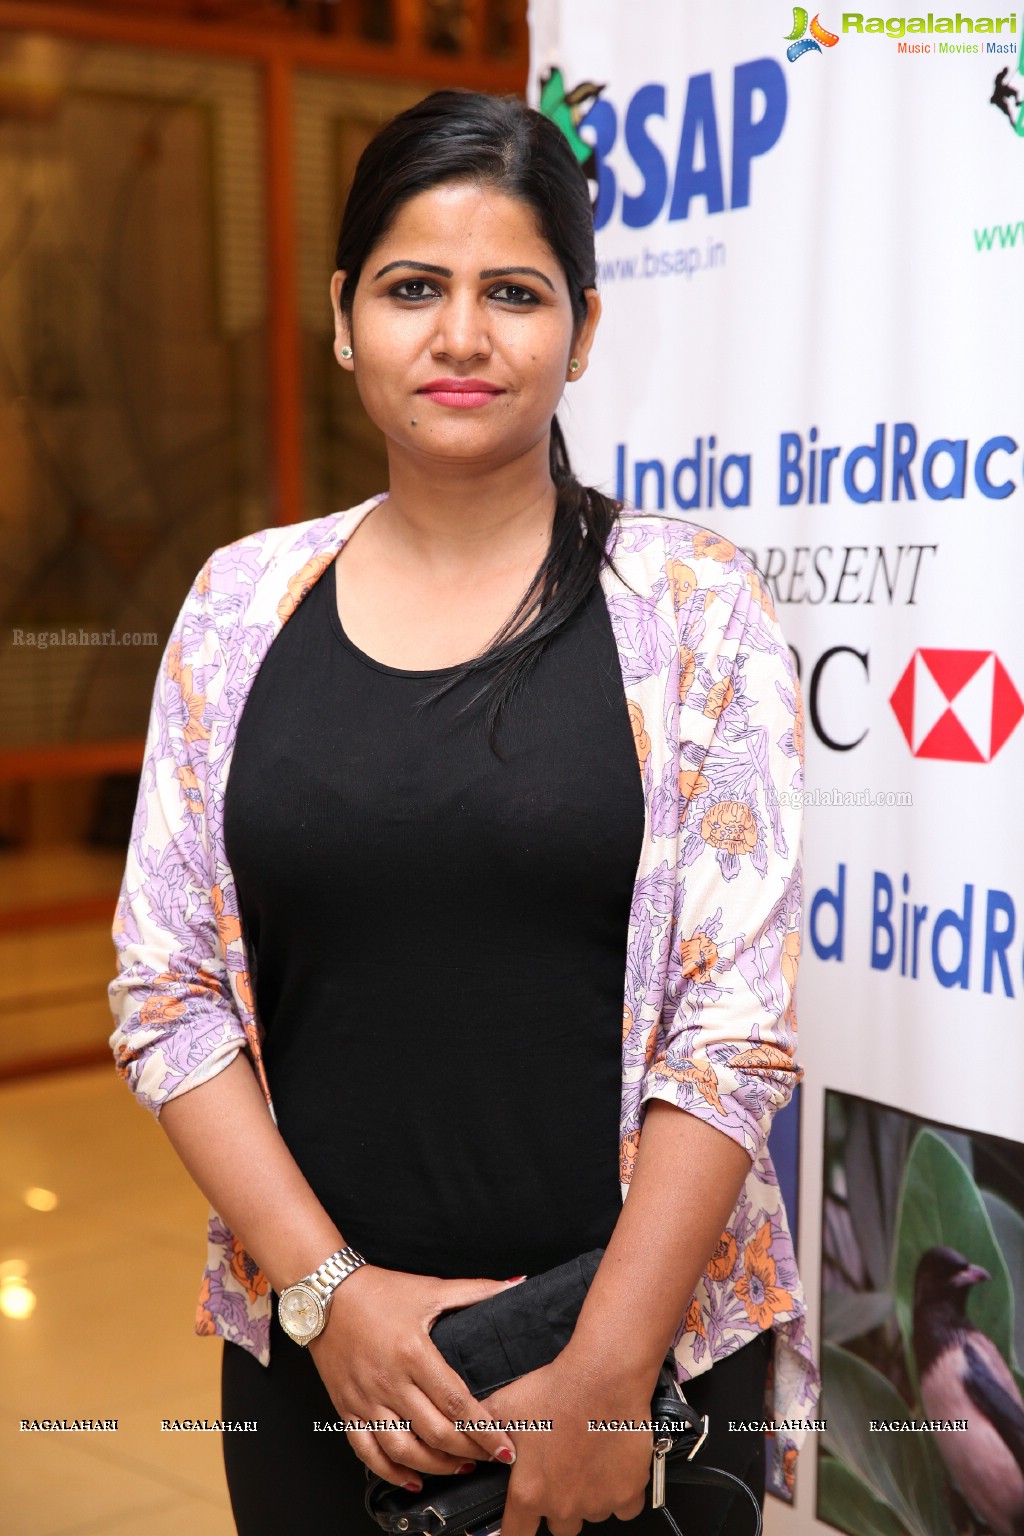 Hyderabad Birdrace at Haritha Plaza, Hyderabad